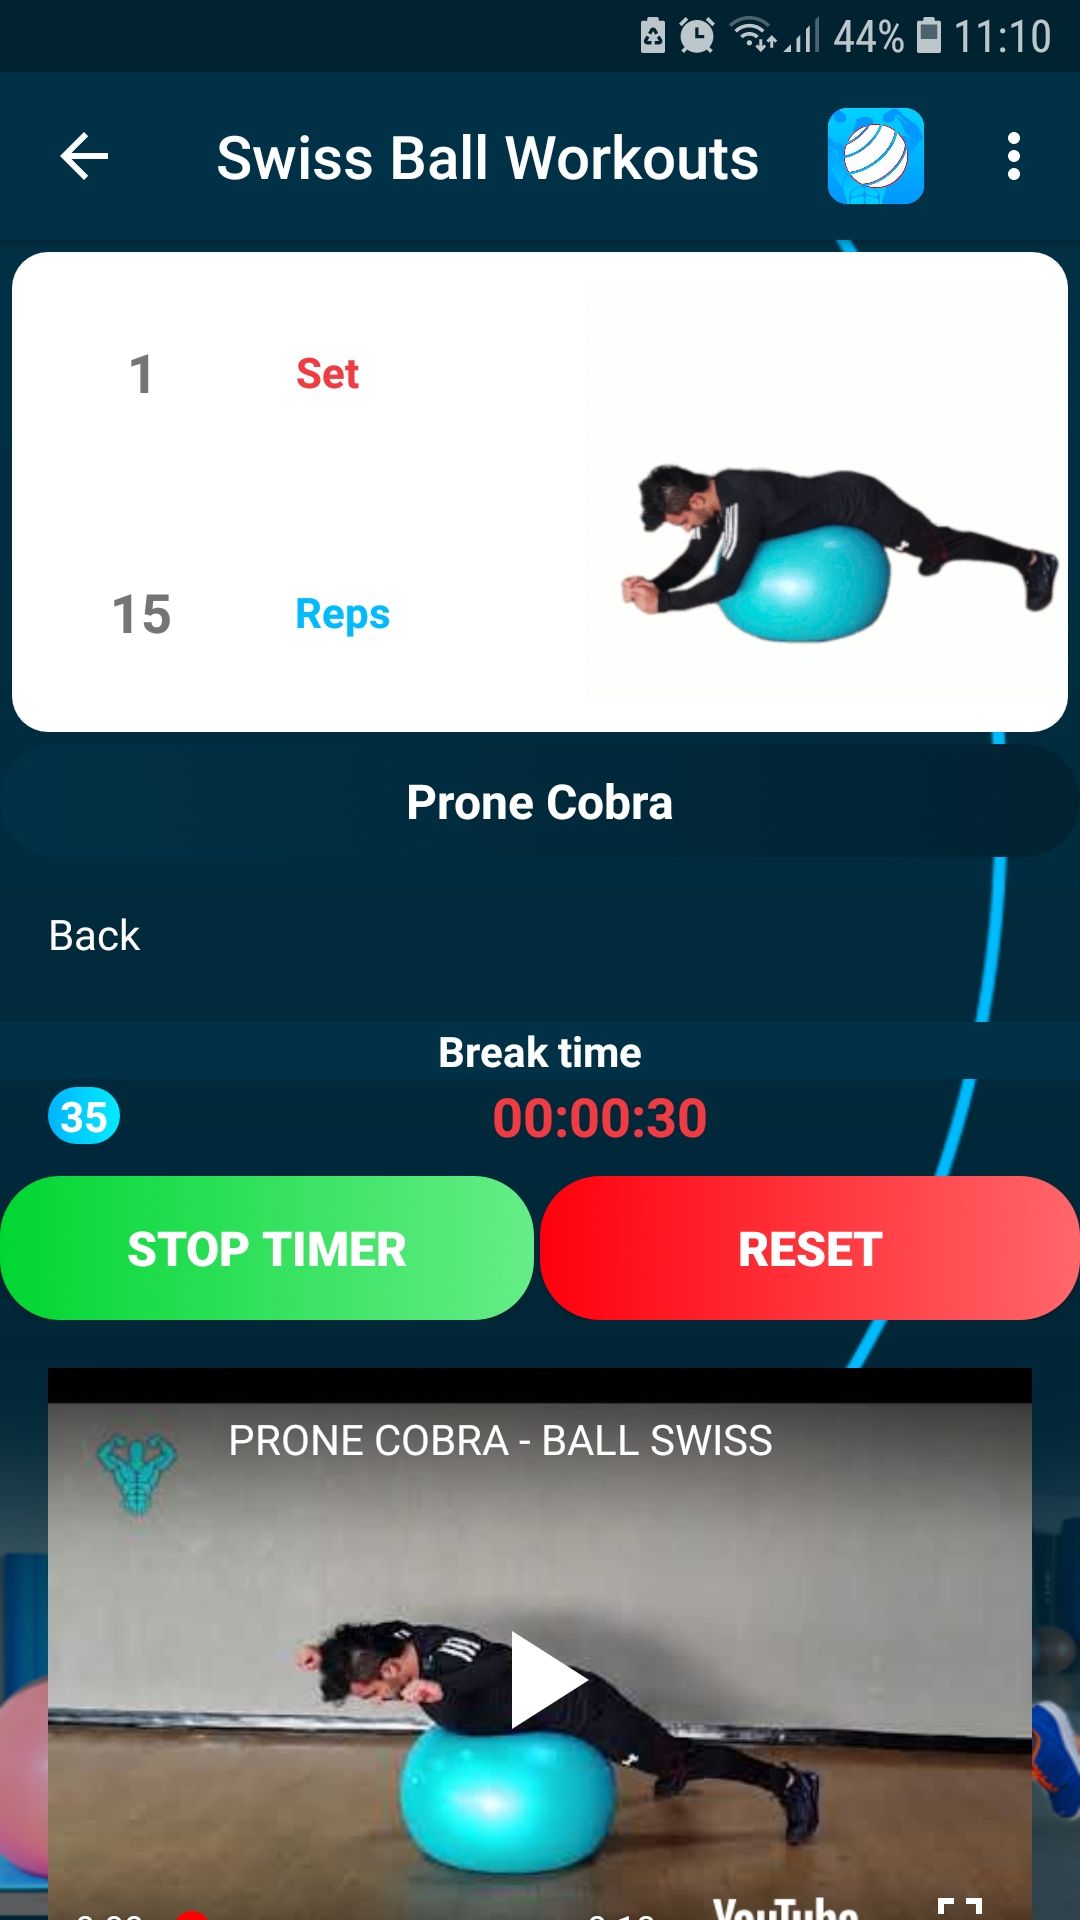 Swiss Ball Workouts mobile fitness app cobra